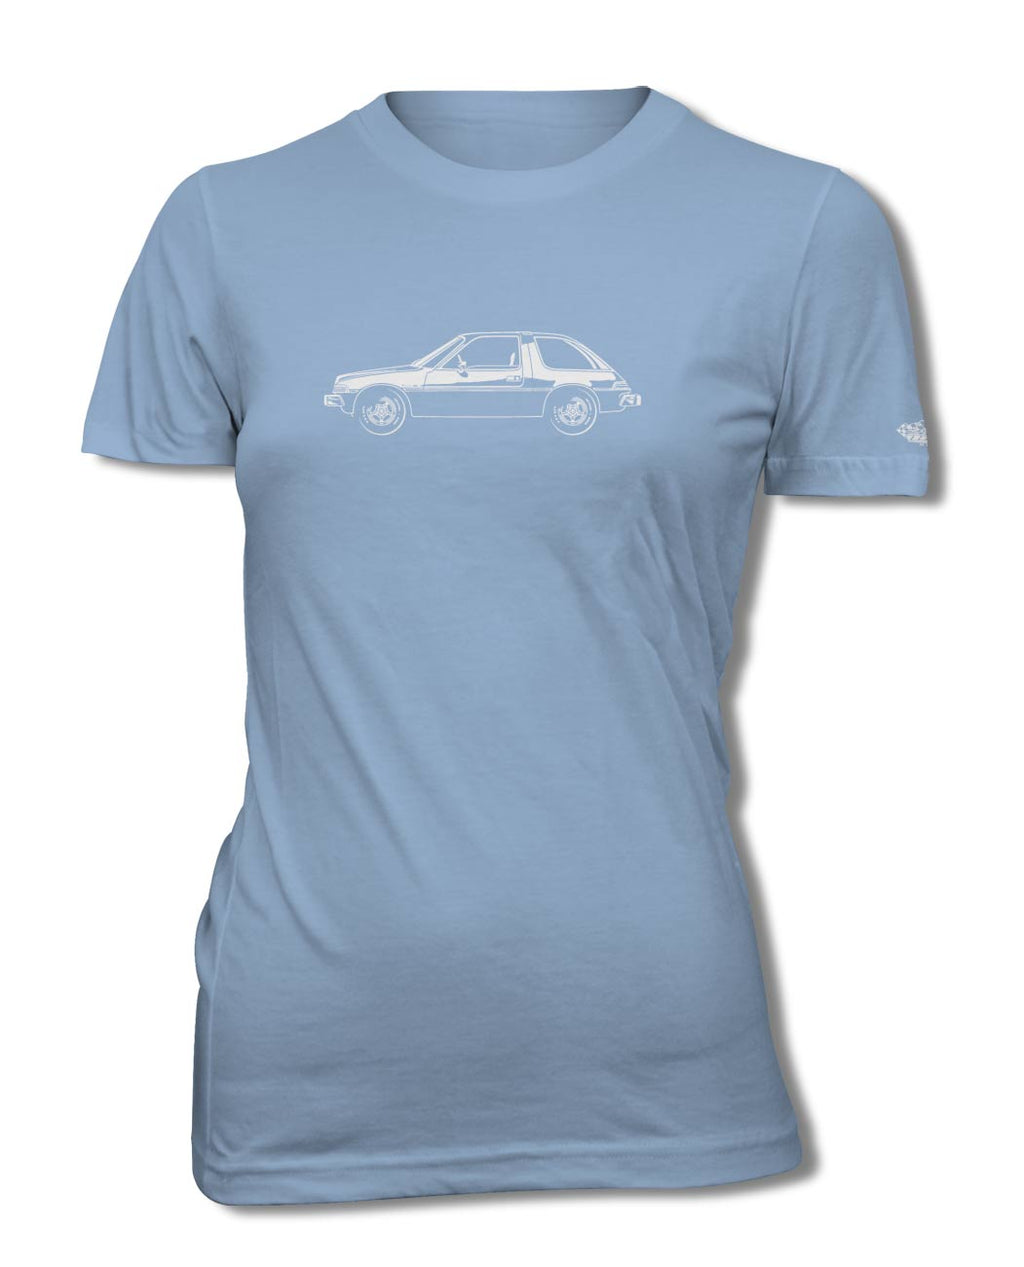 1978 AMC Pacer X T-Shirt - Women - Side View